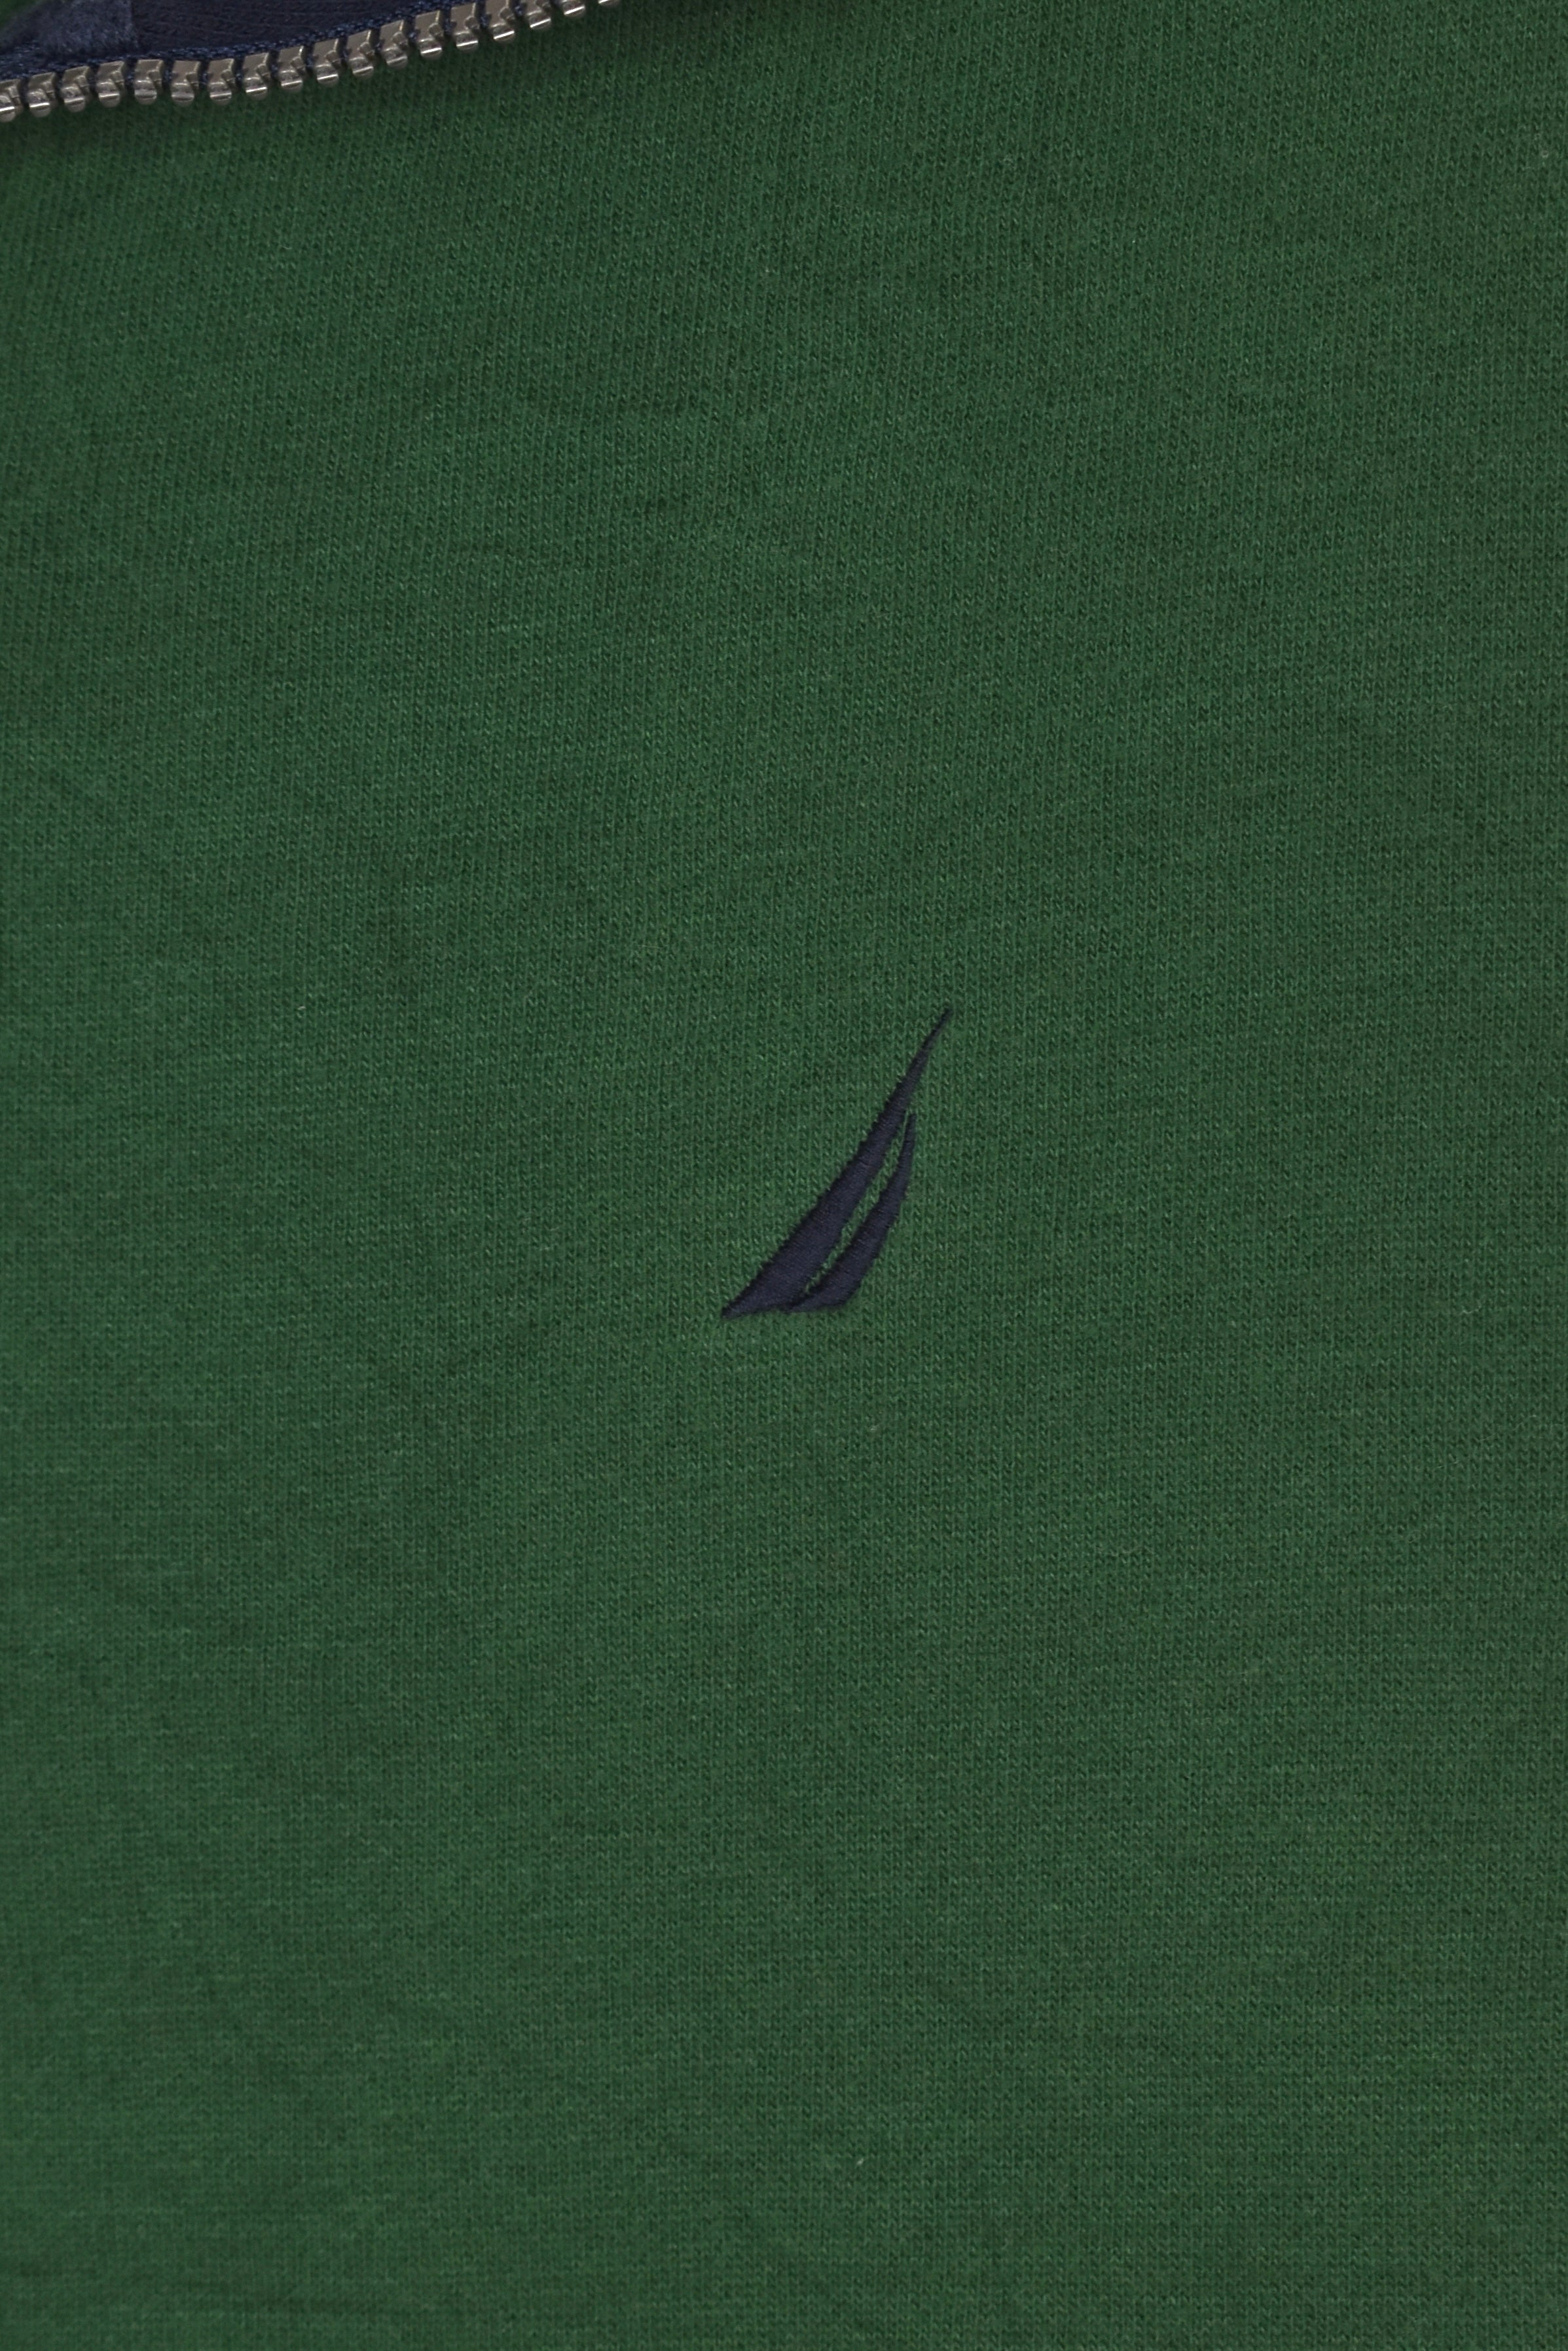 Vintage Nautica 1/4 zip (L), green embroidered sweatshirt